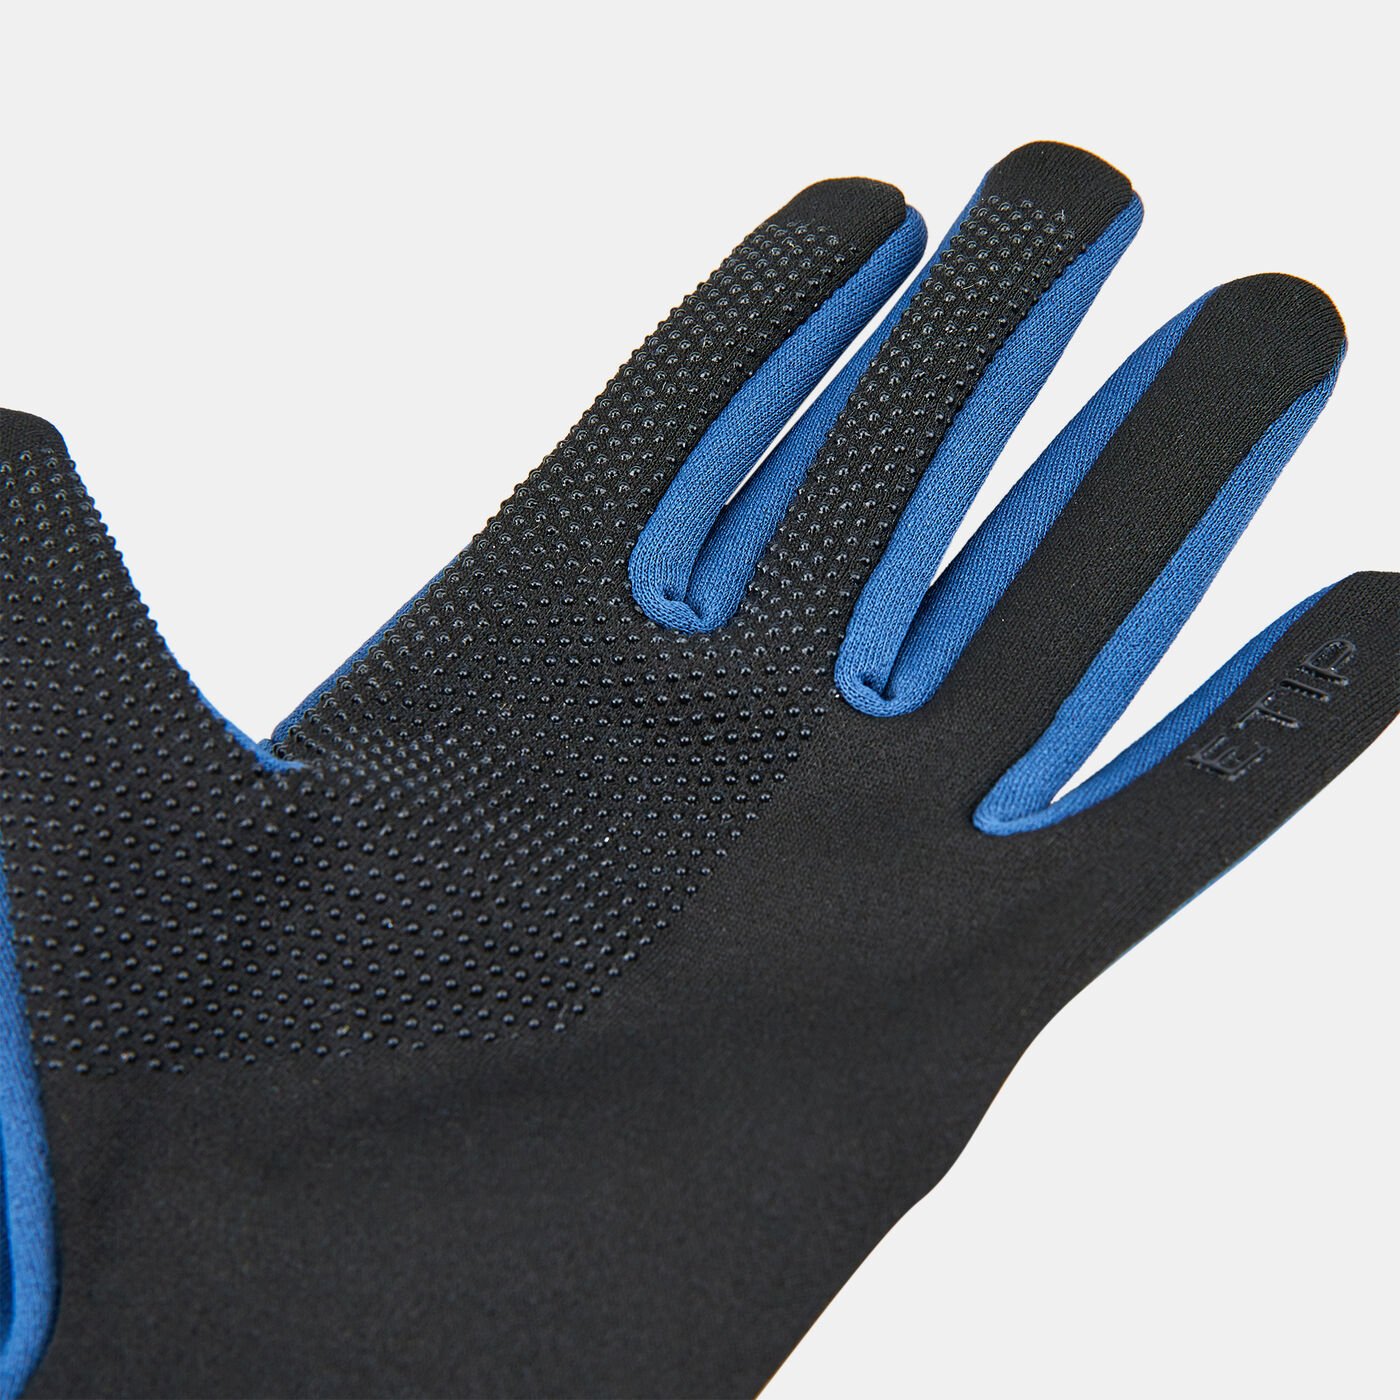 Women's Recycled ETIP™ Gloves